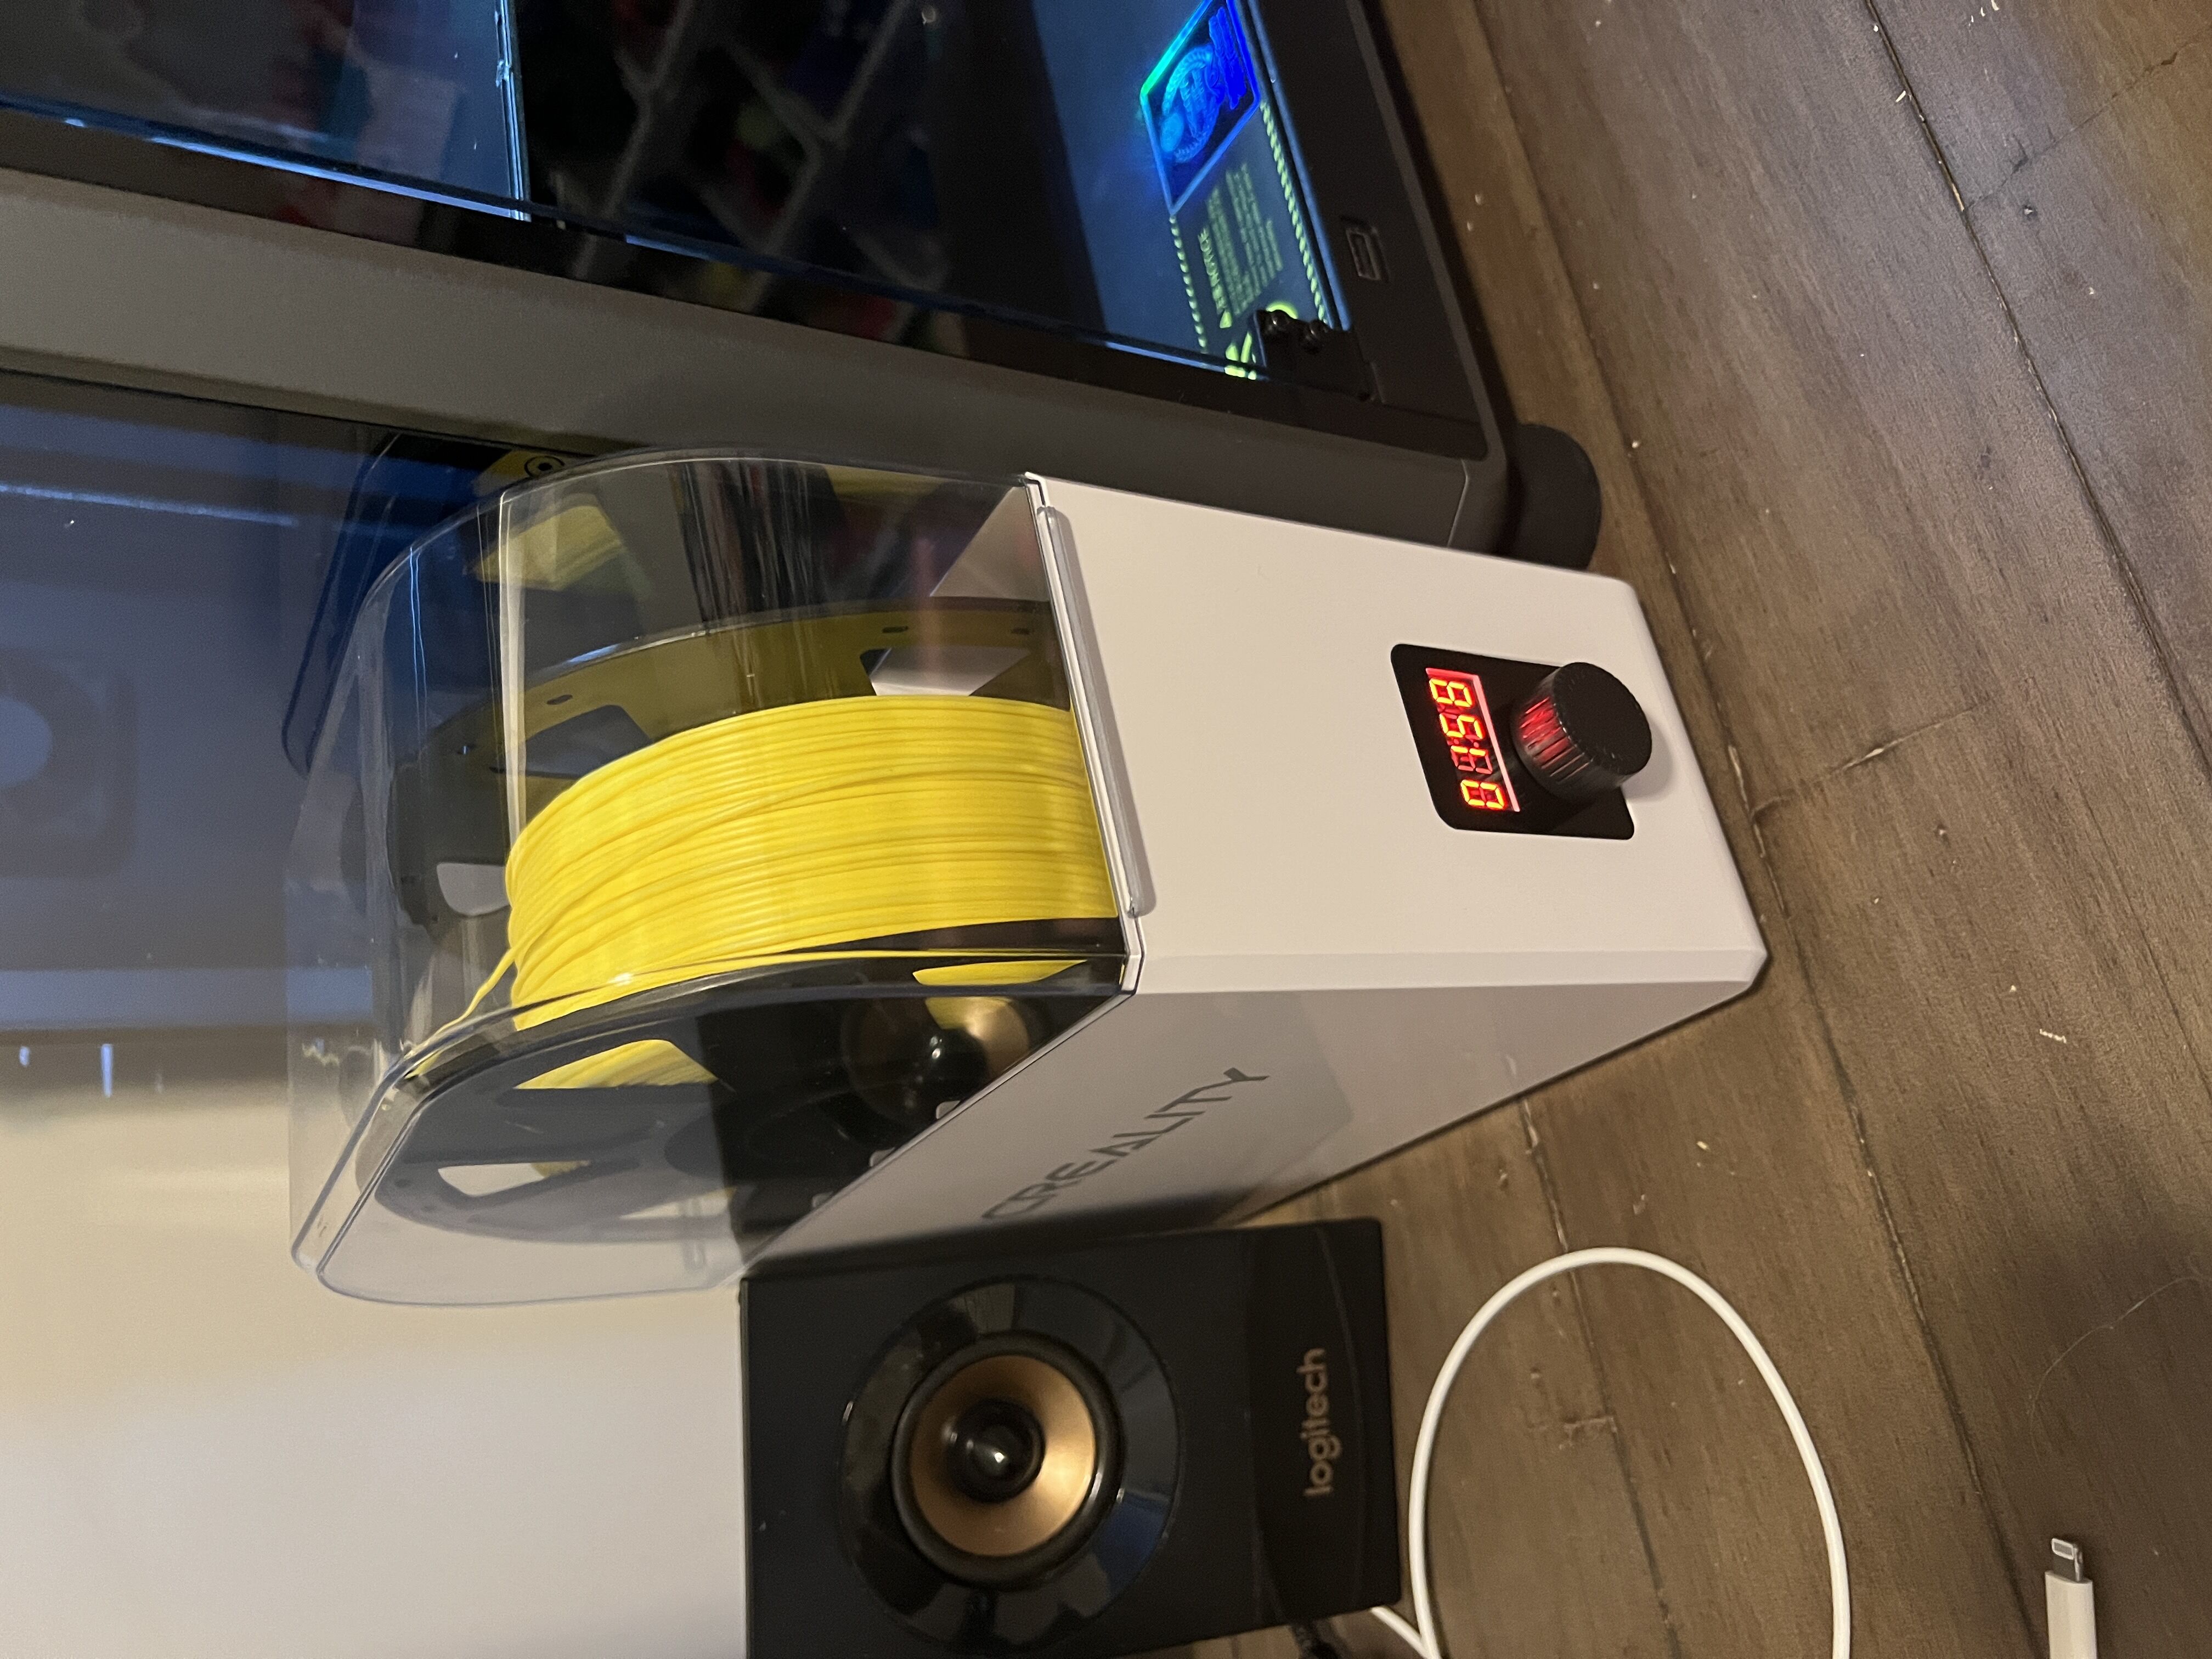 Creality 3D Printer Filament Dry Box - Printing Filament Dryer, Storag